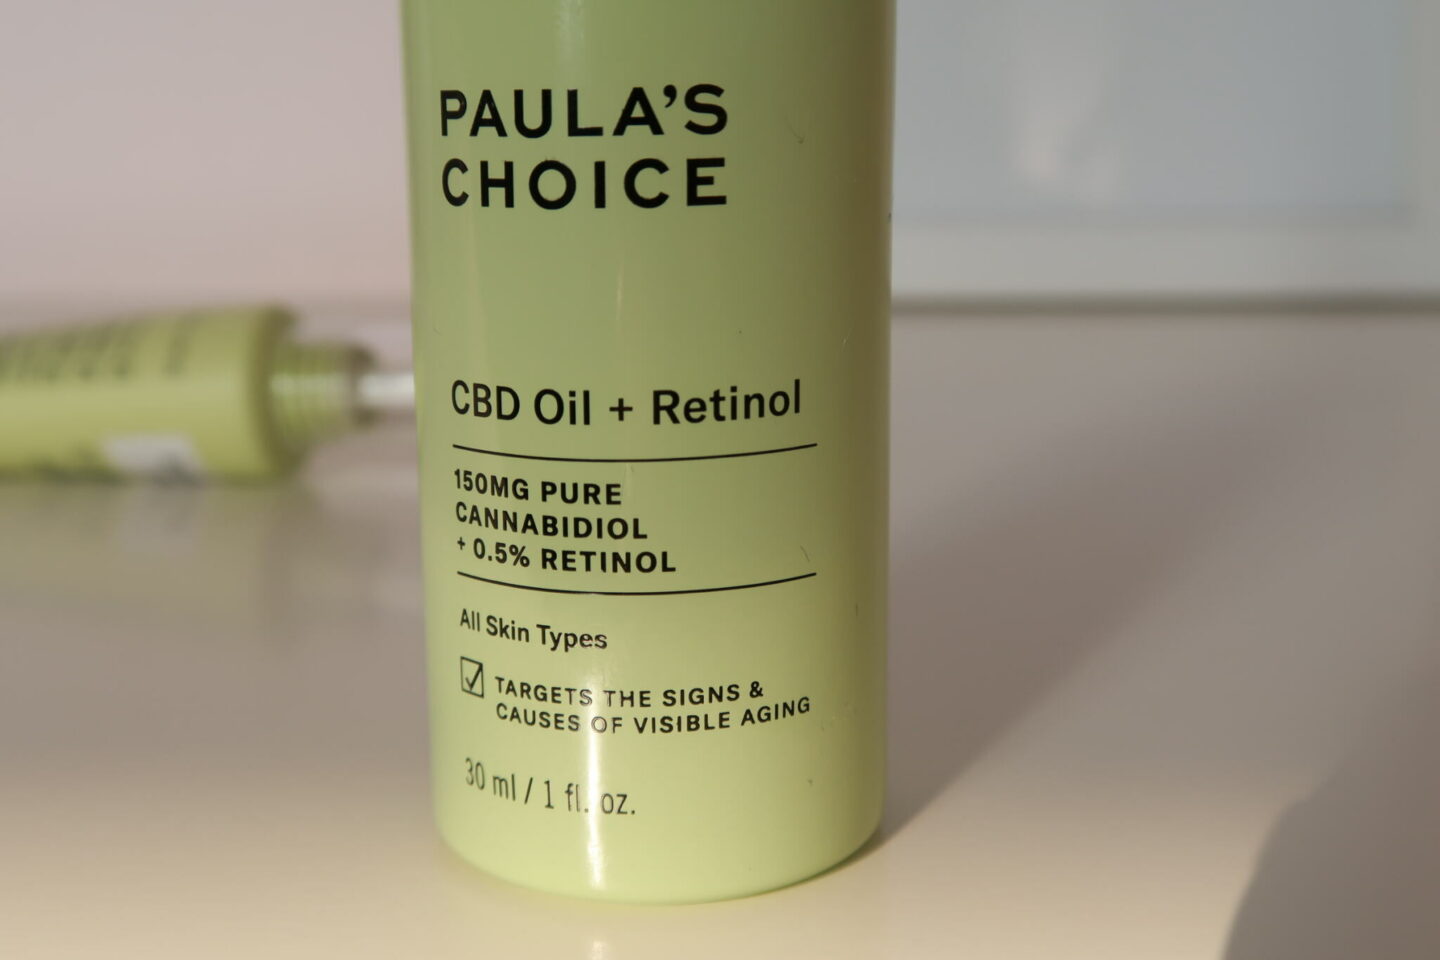 Paula's Choice CBD Oil + Retinol.  

#cbd #skincare #beauty #soins #routinesoins #skincareroutine #paulaschoice #retinol #inflammedskin 